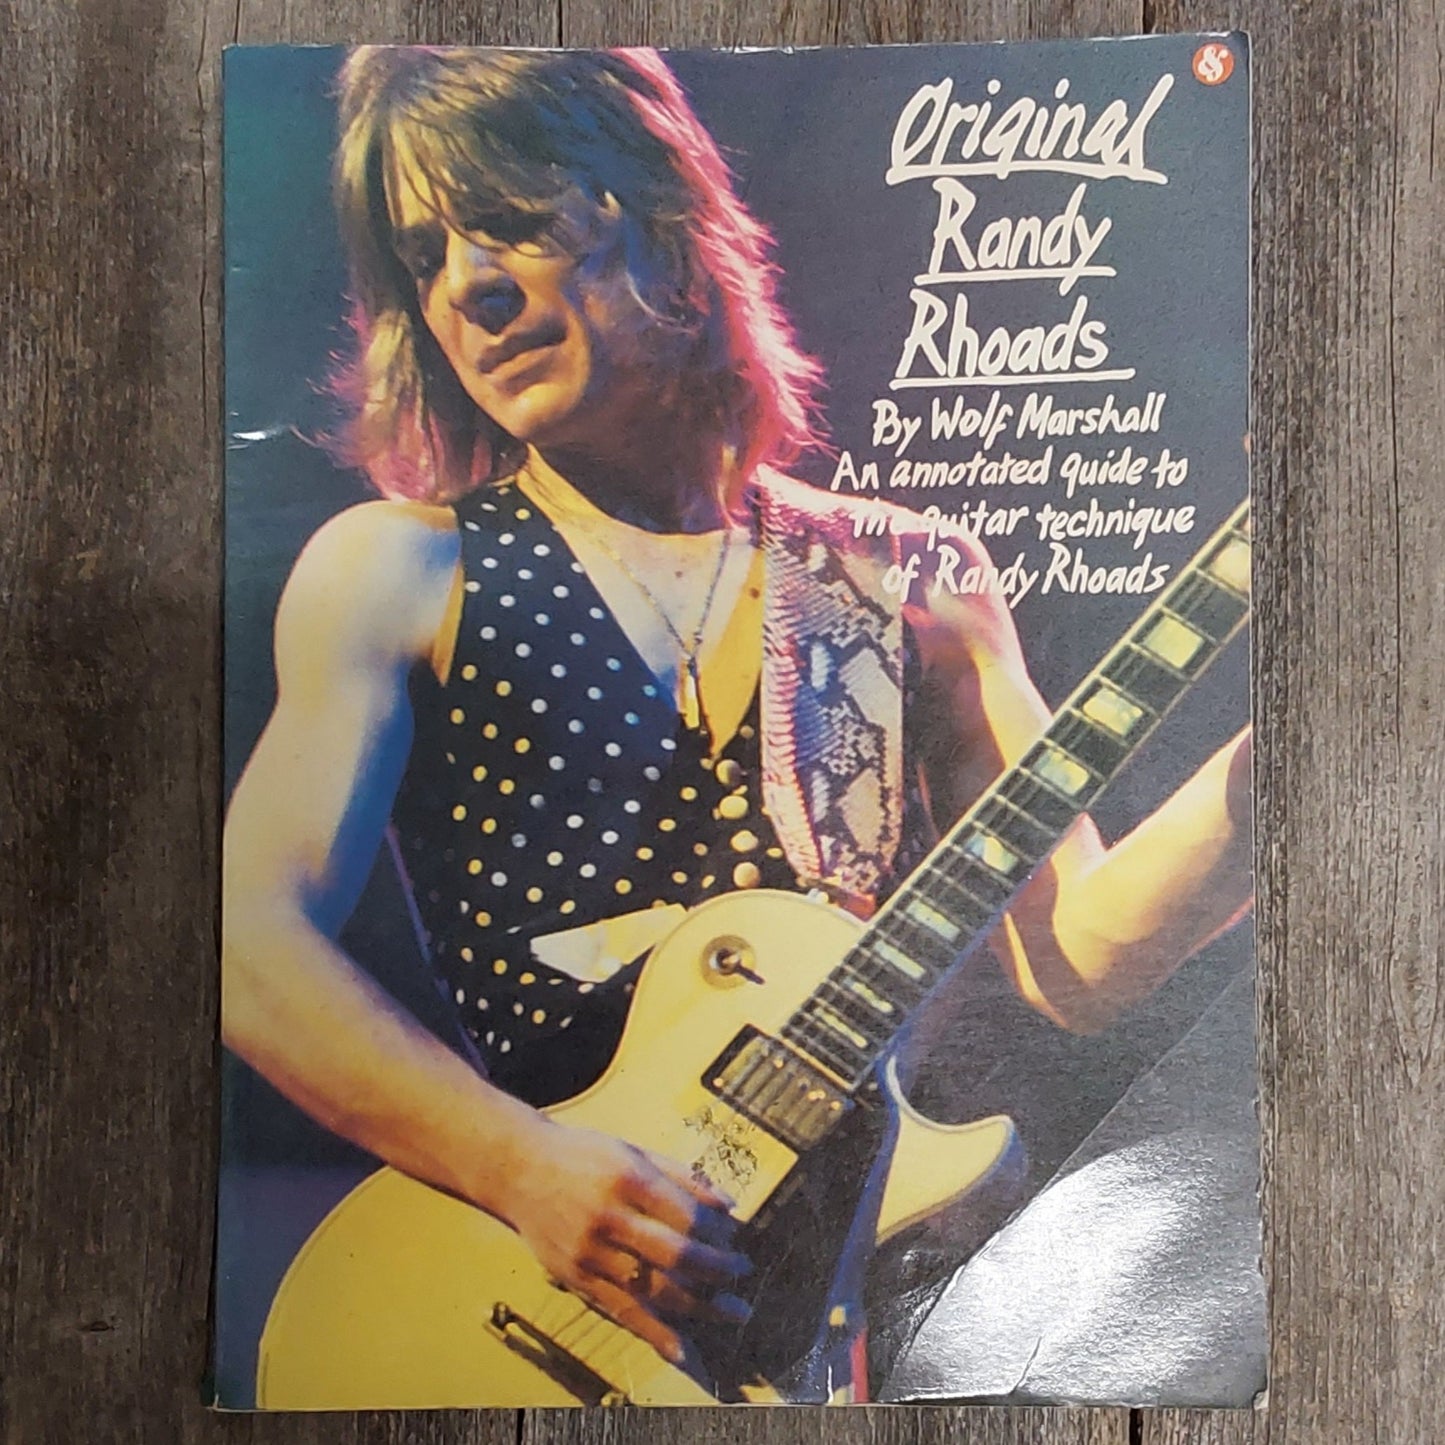 Used Original Randy Rhoads Lesson Book by Wolf Marshall Rare 1986 AMSCO